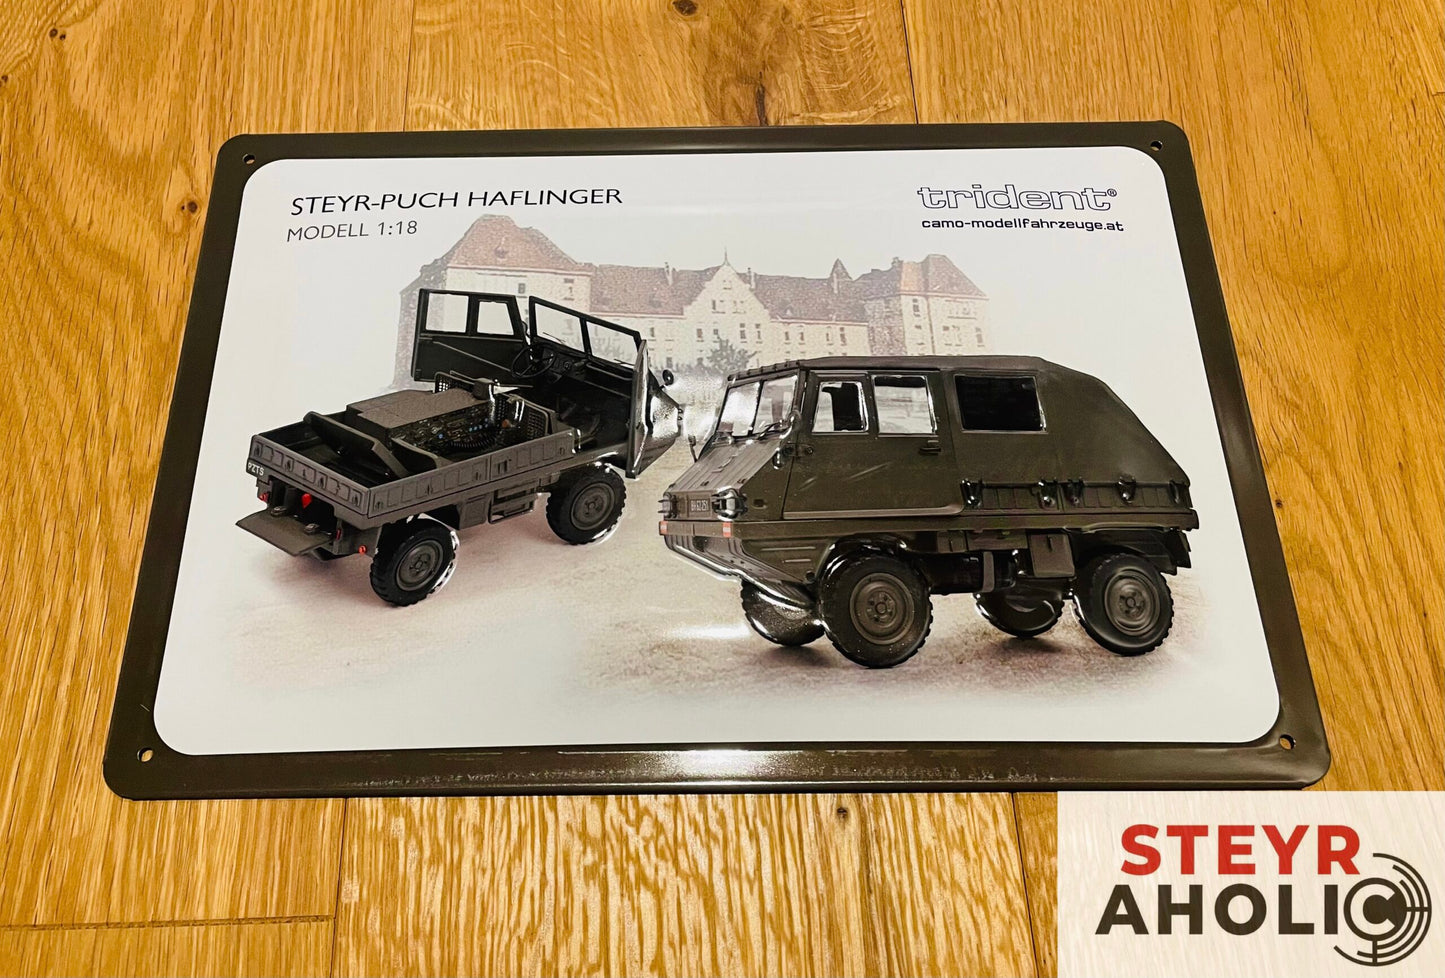 Blechschild Steyr-Puch Haflinger "Militärfunkwagen"